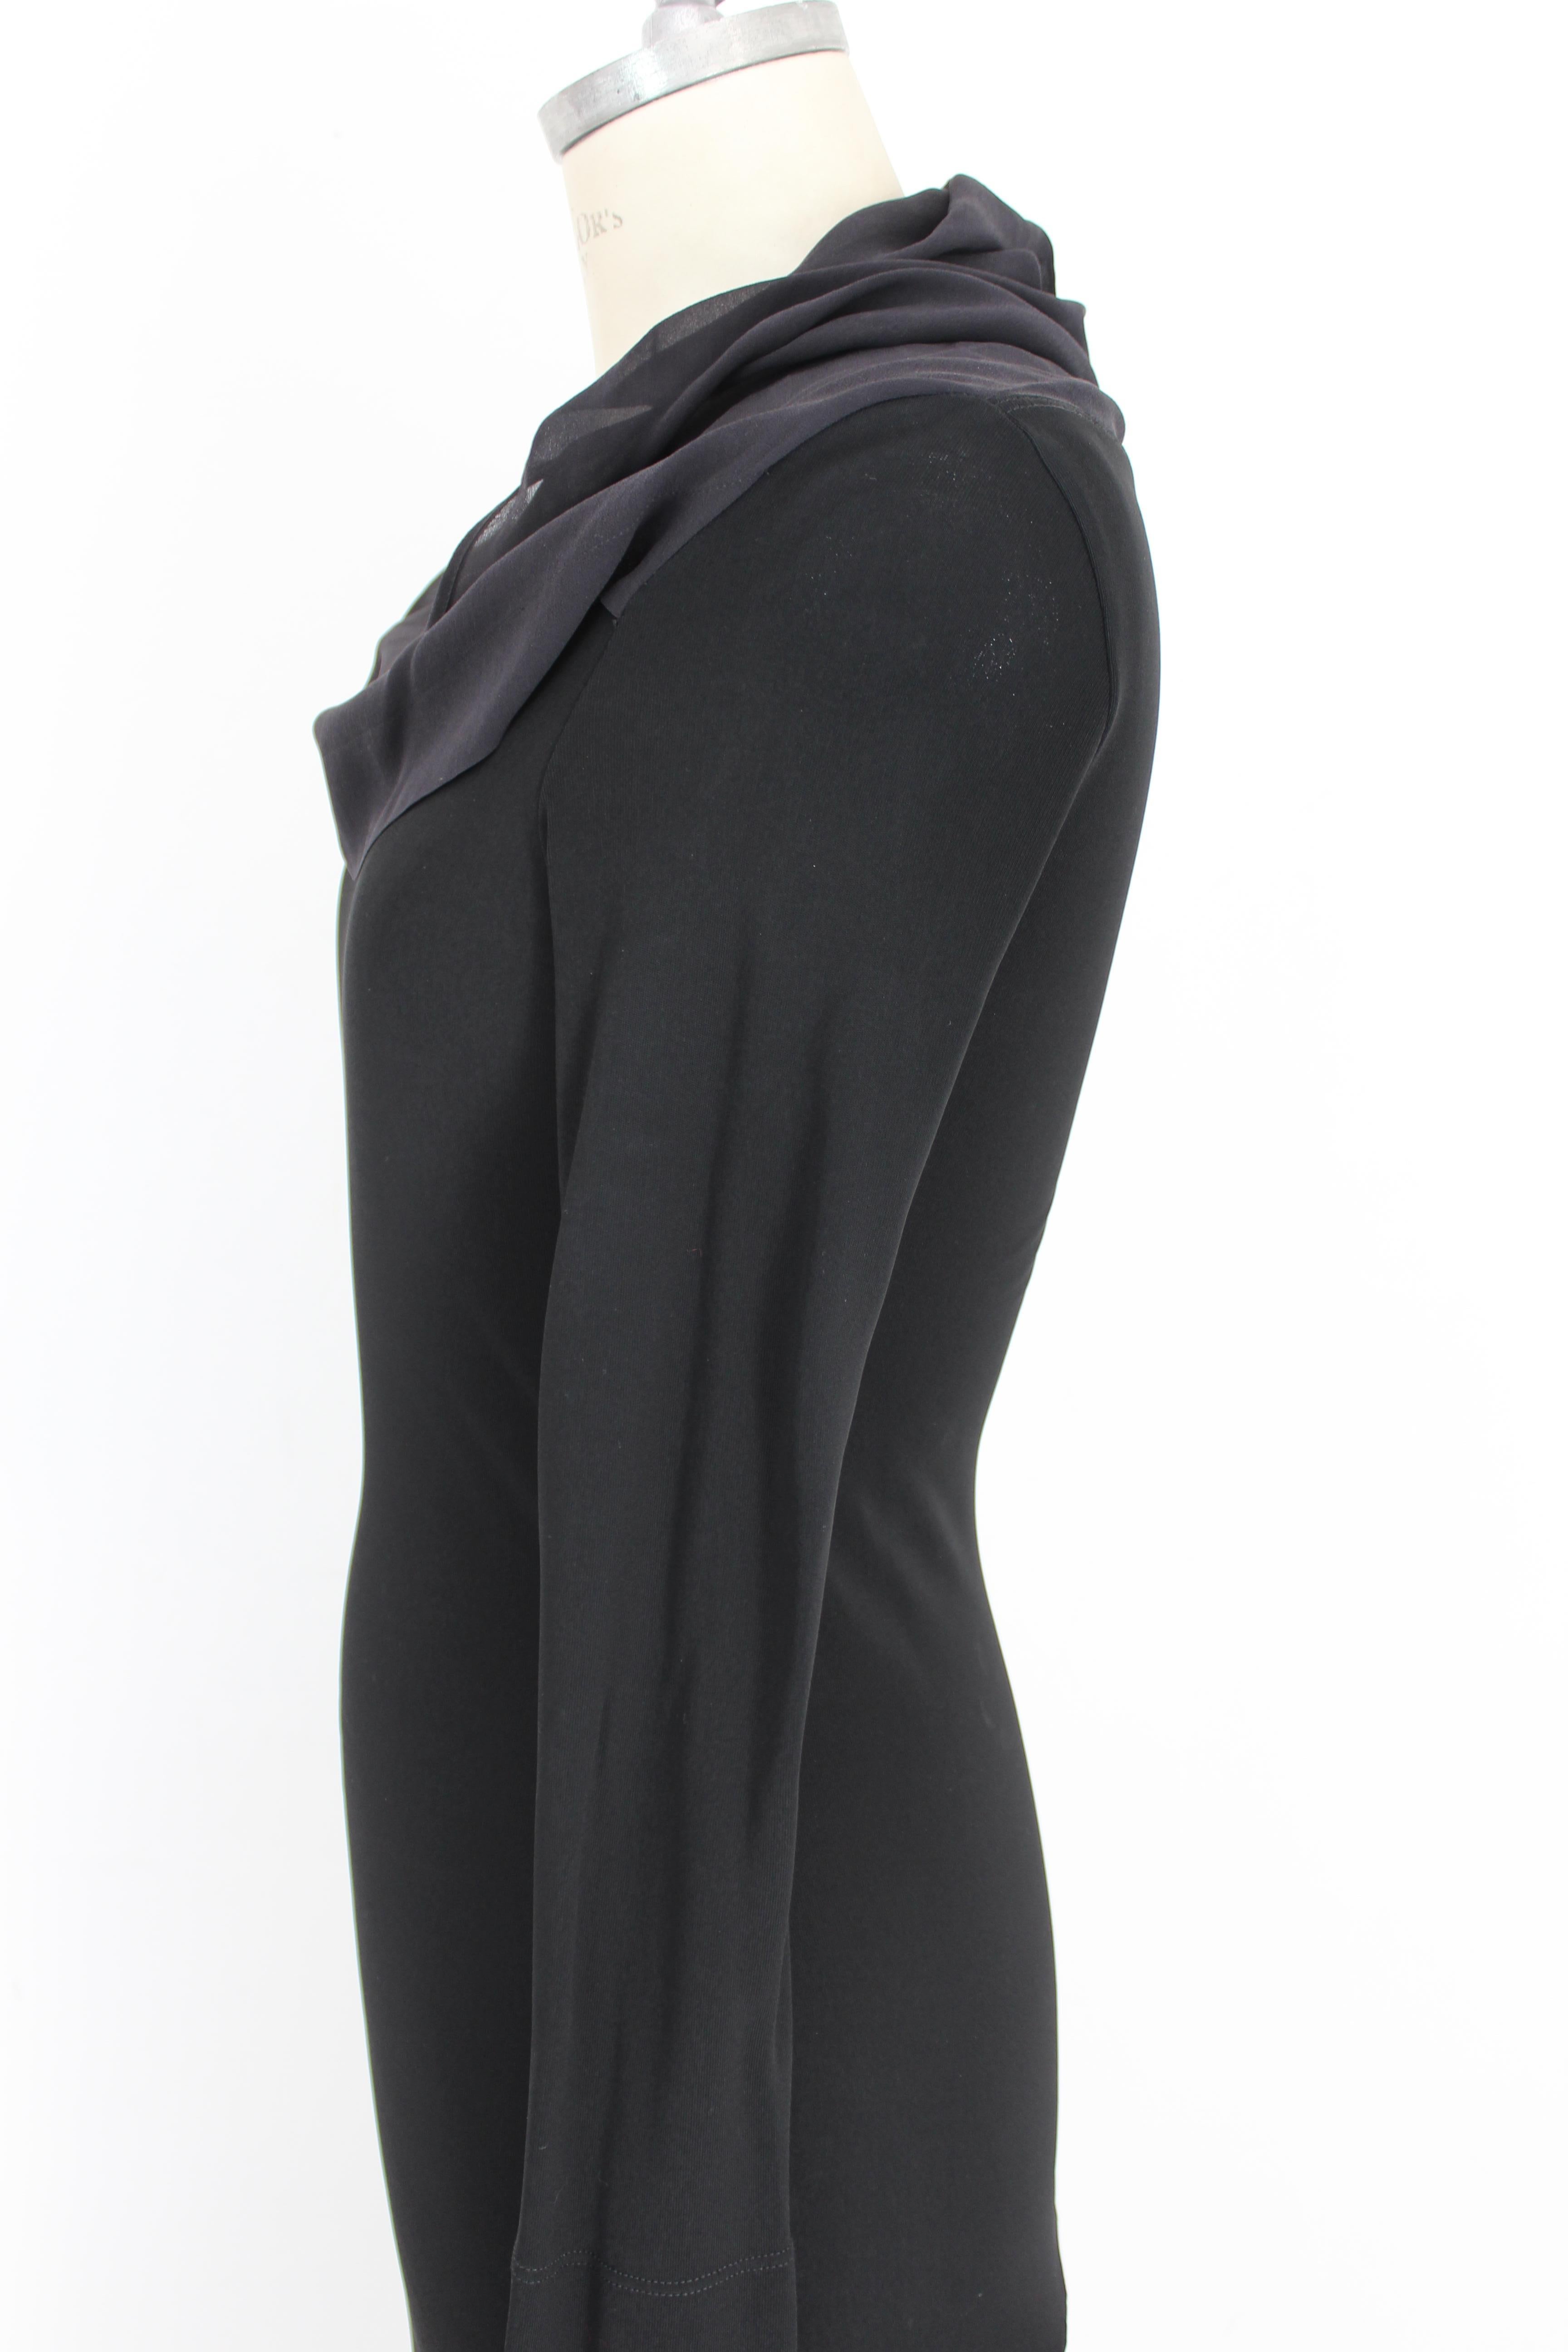 Jean Paul Gaultier Black Silk Bodycon Long Evening Dress 2000s  6